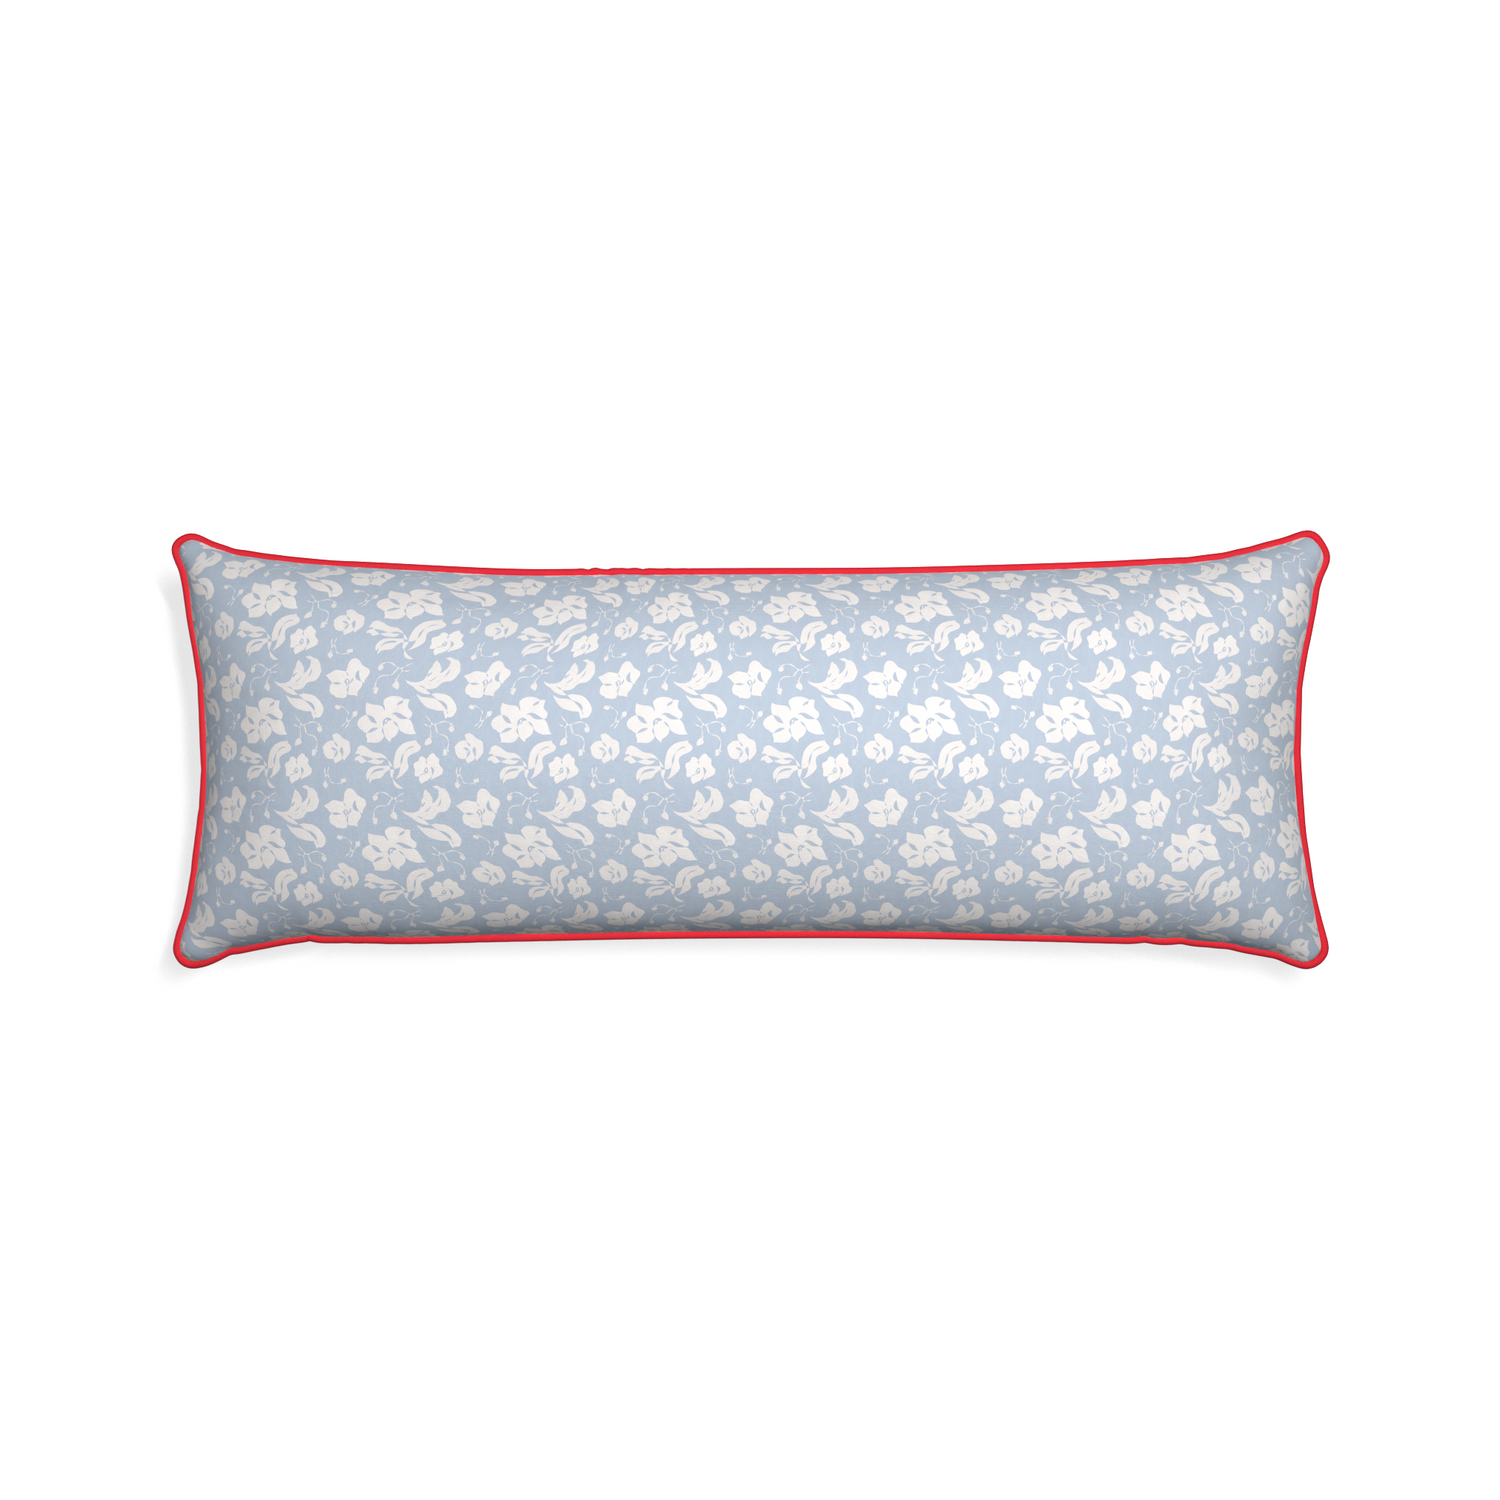 Xl-lumbar georgia custom pillow with cherry piping on white background